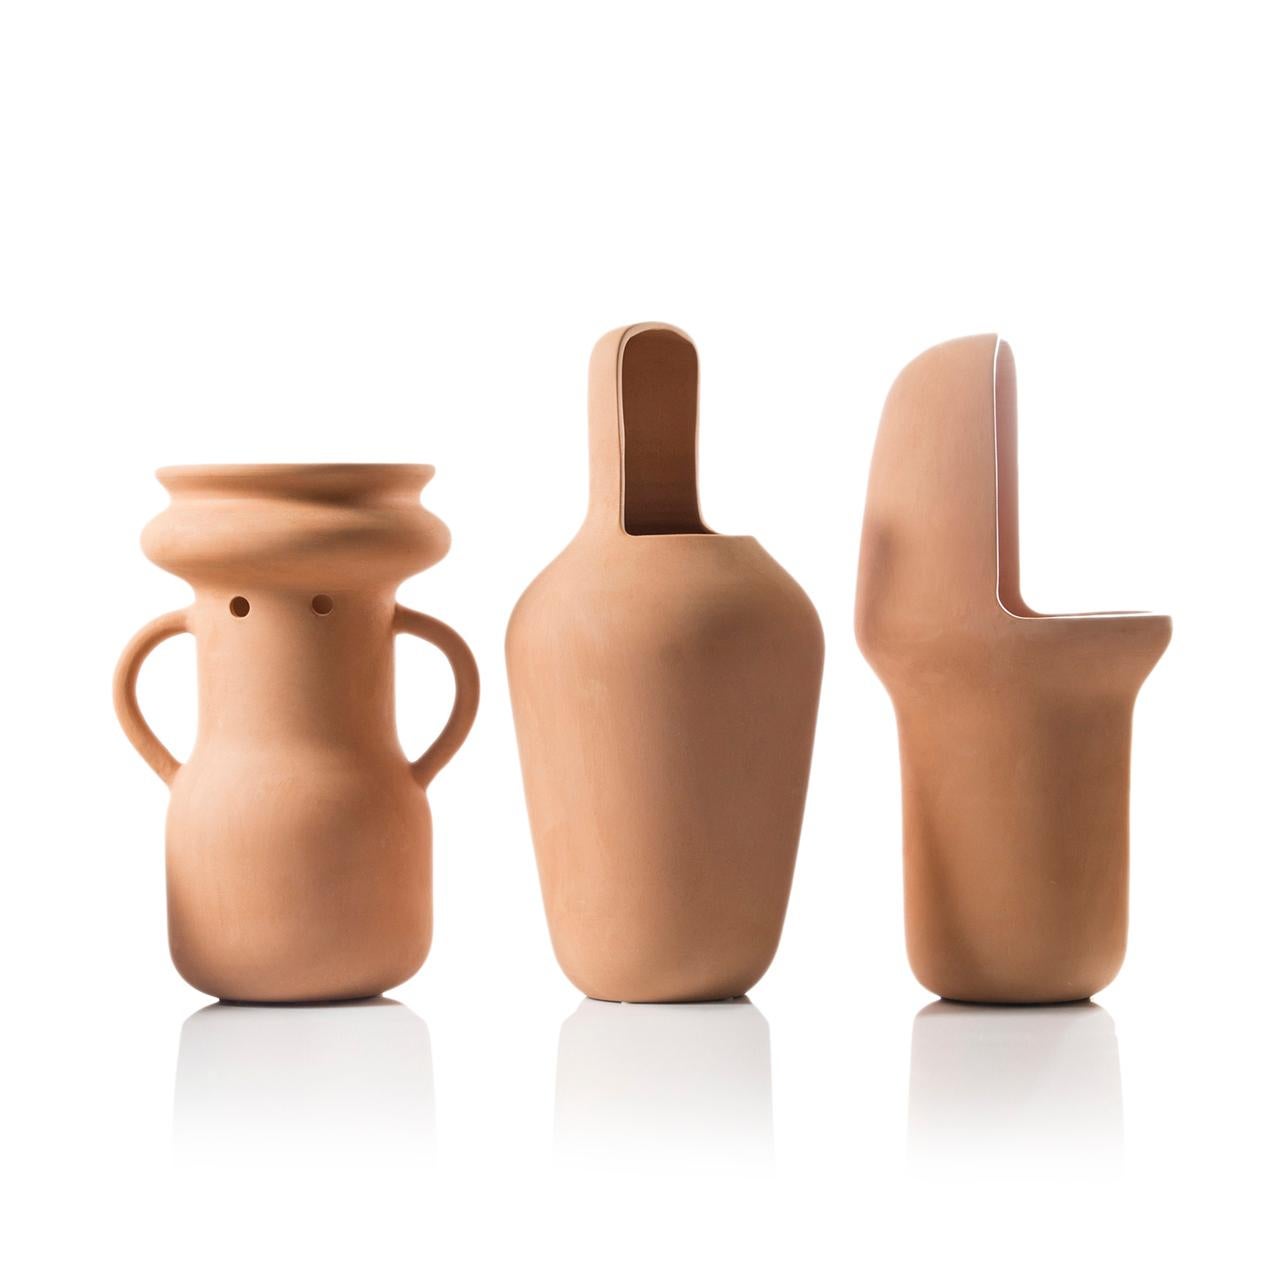 Spanish Jaime Hayon Contemporary Terracotta Set of Gardenias Big Vases For Sale